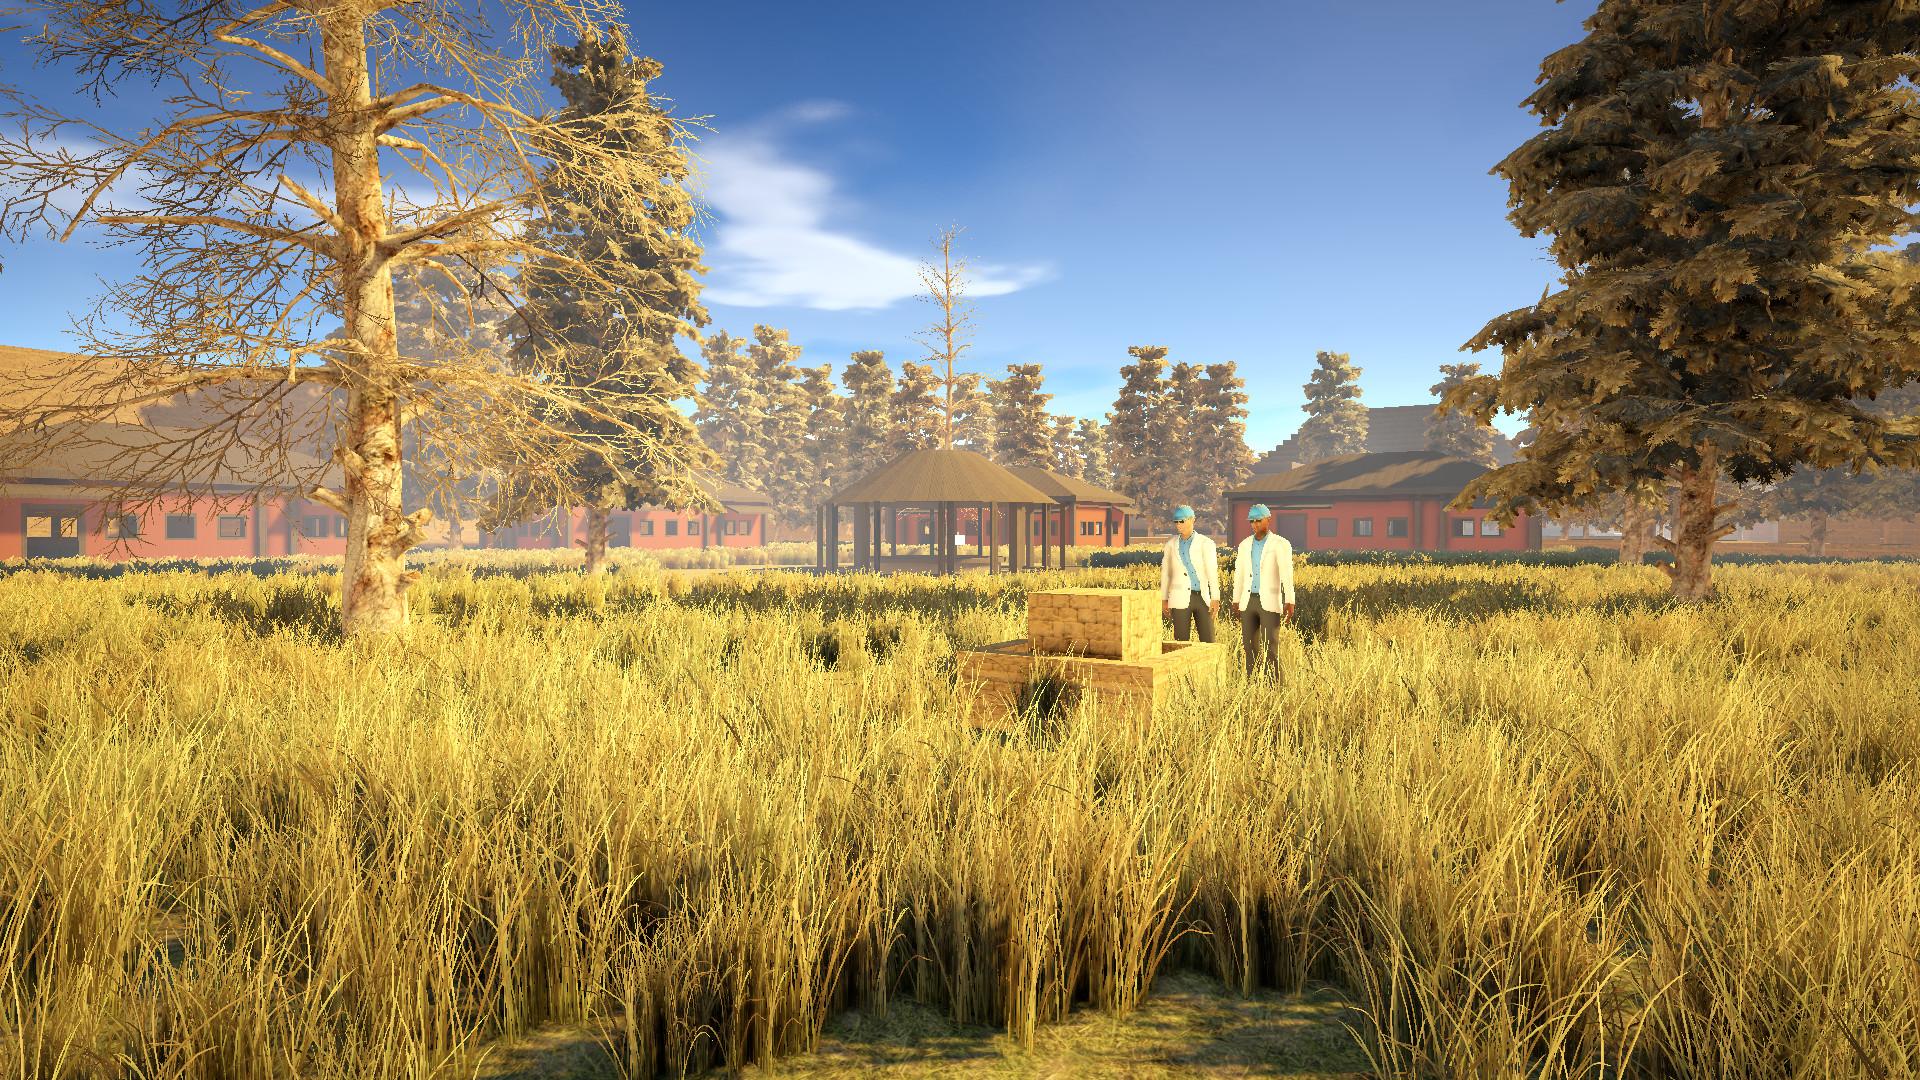 Screenshot №14 from game Endangered